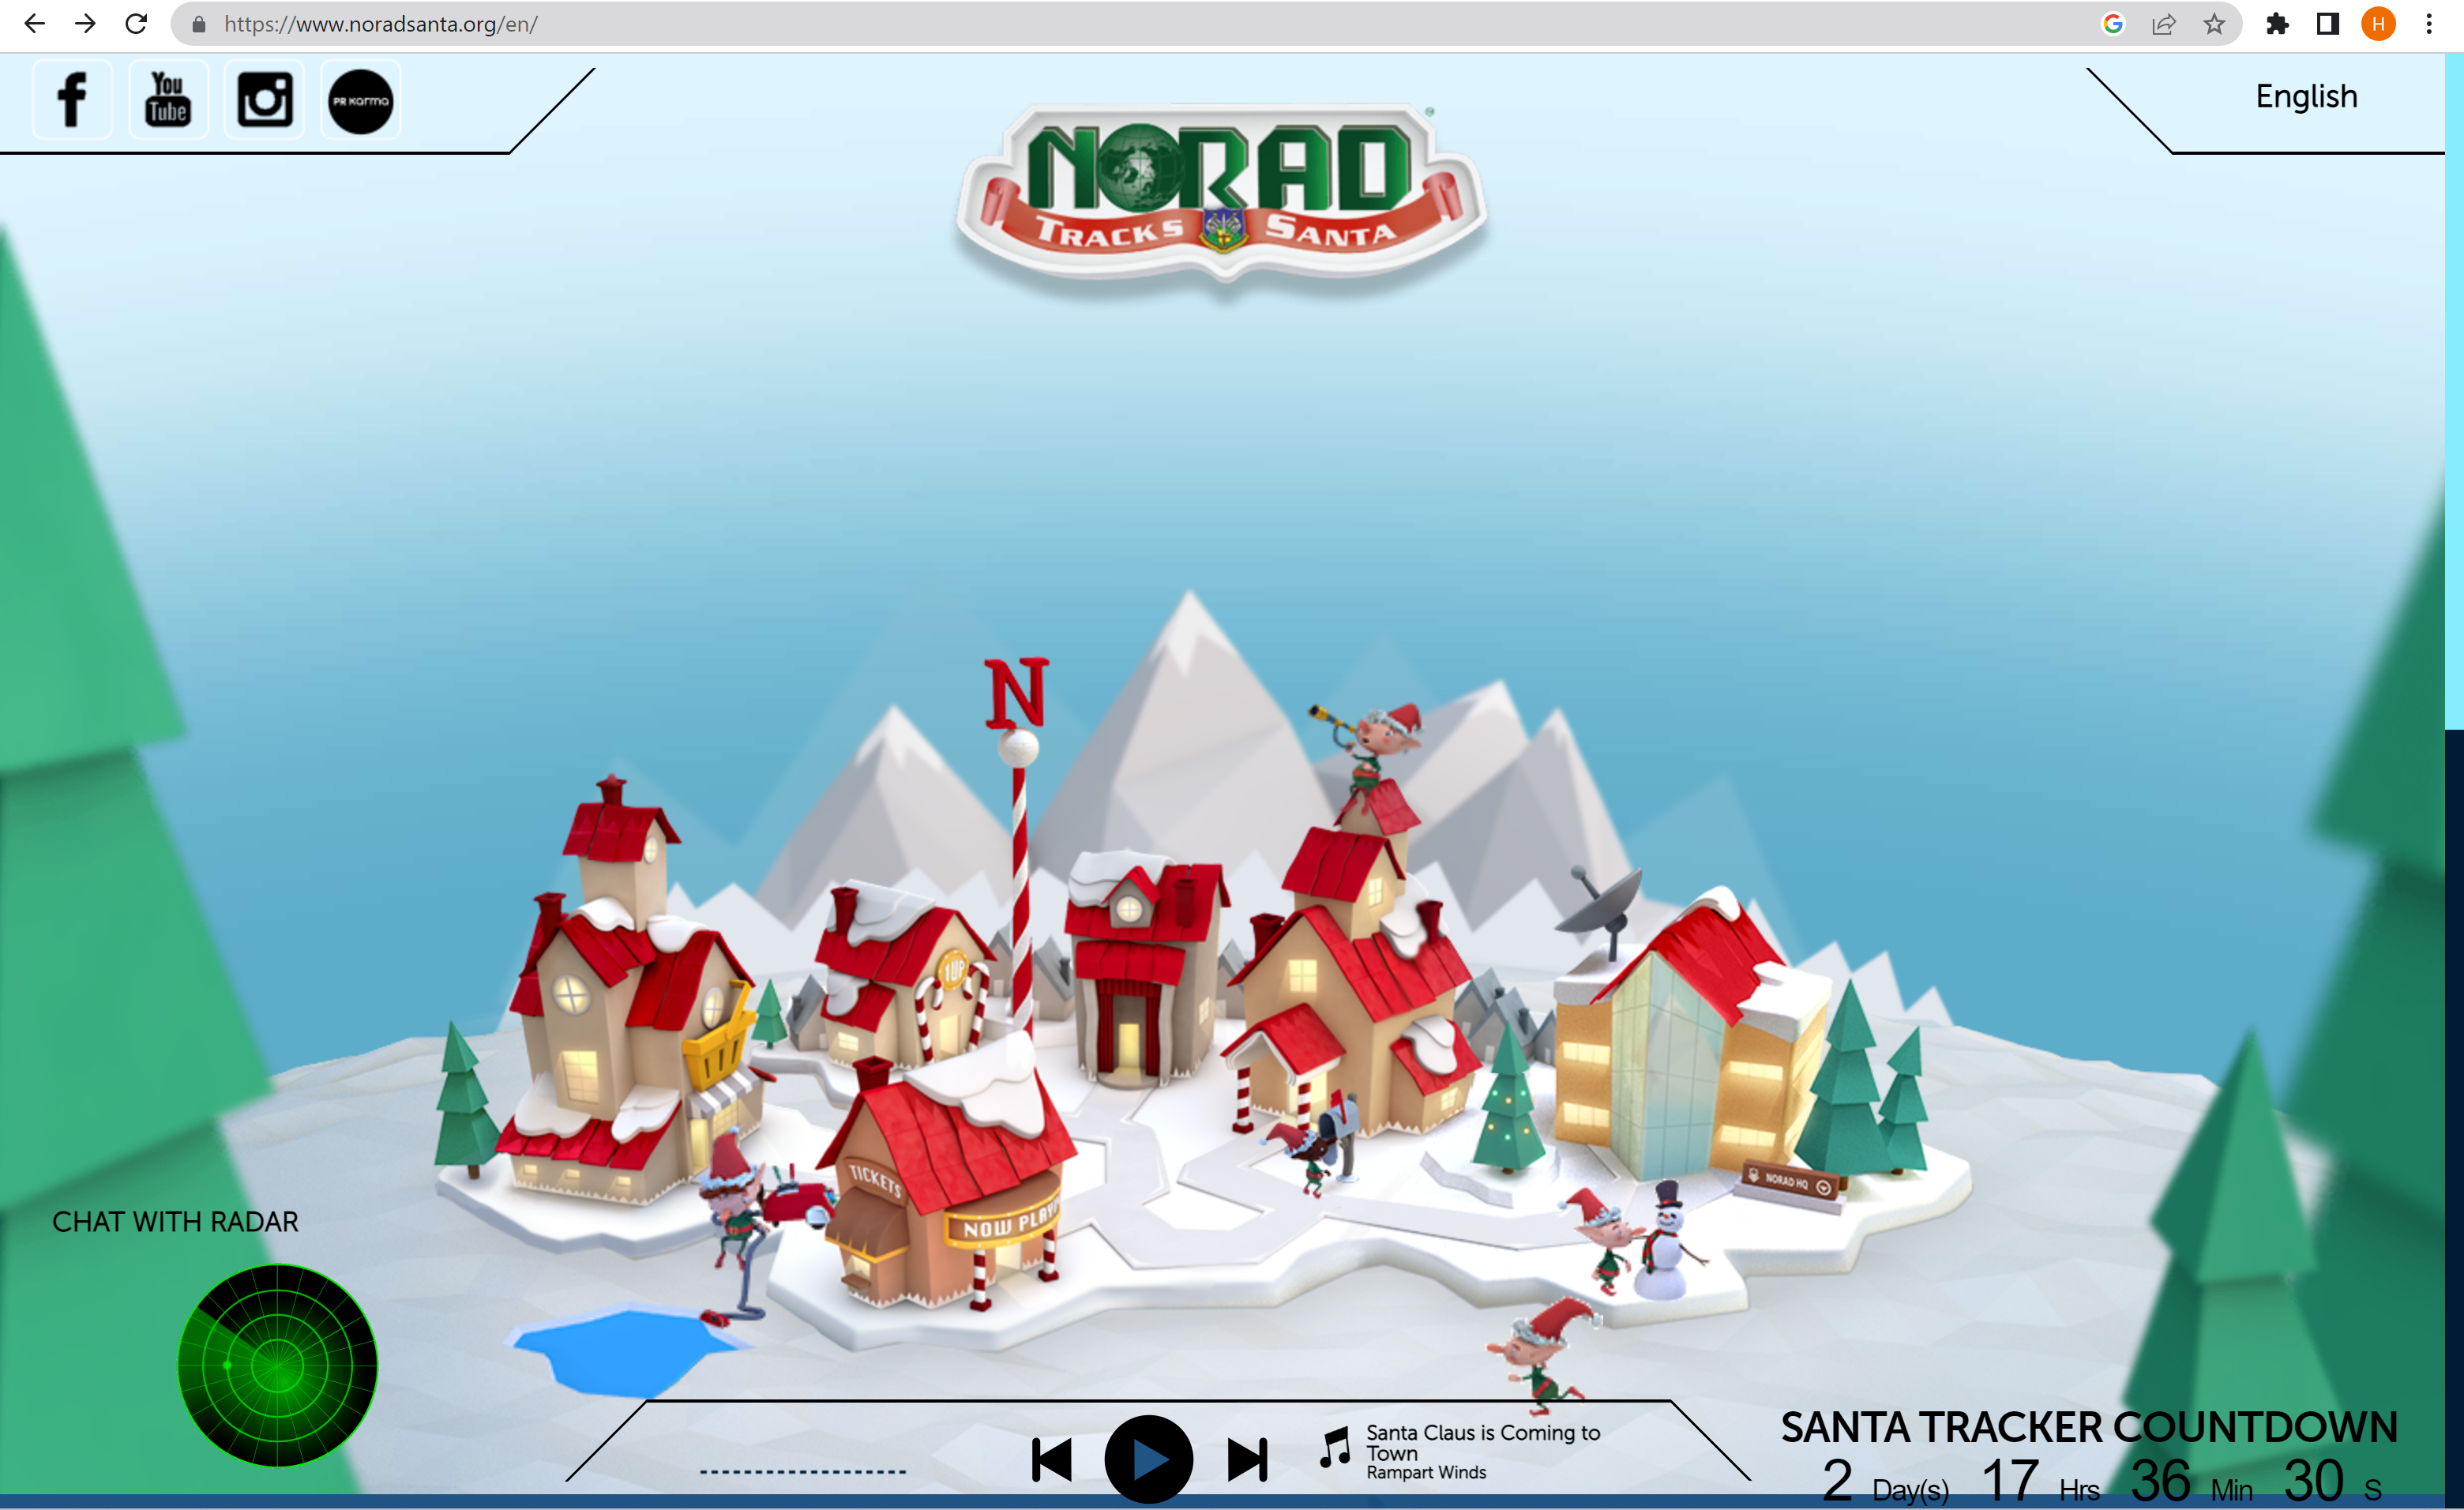 NORAD rastrea a Papá Noel